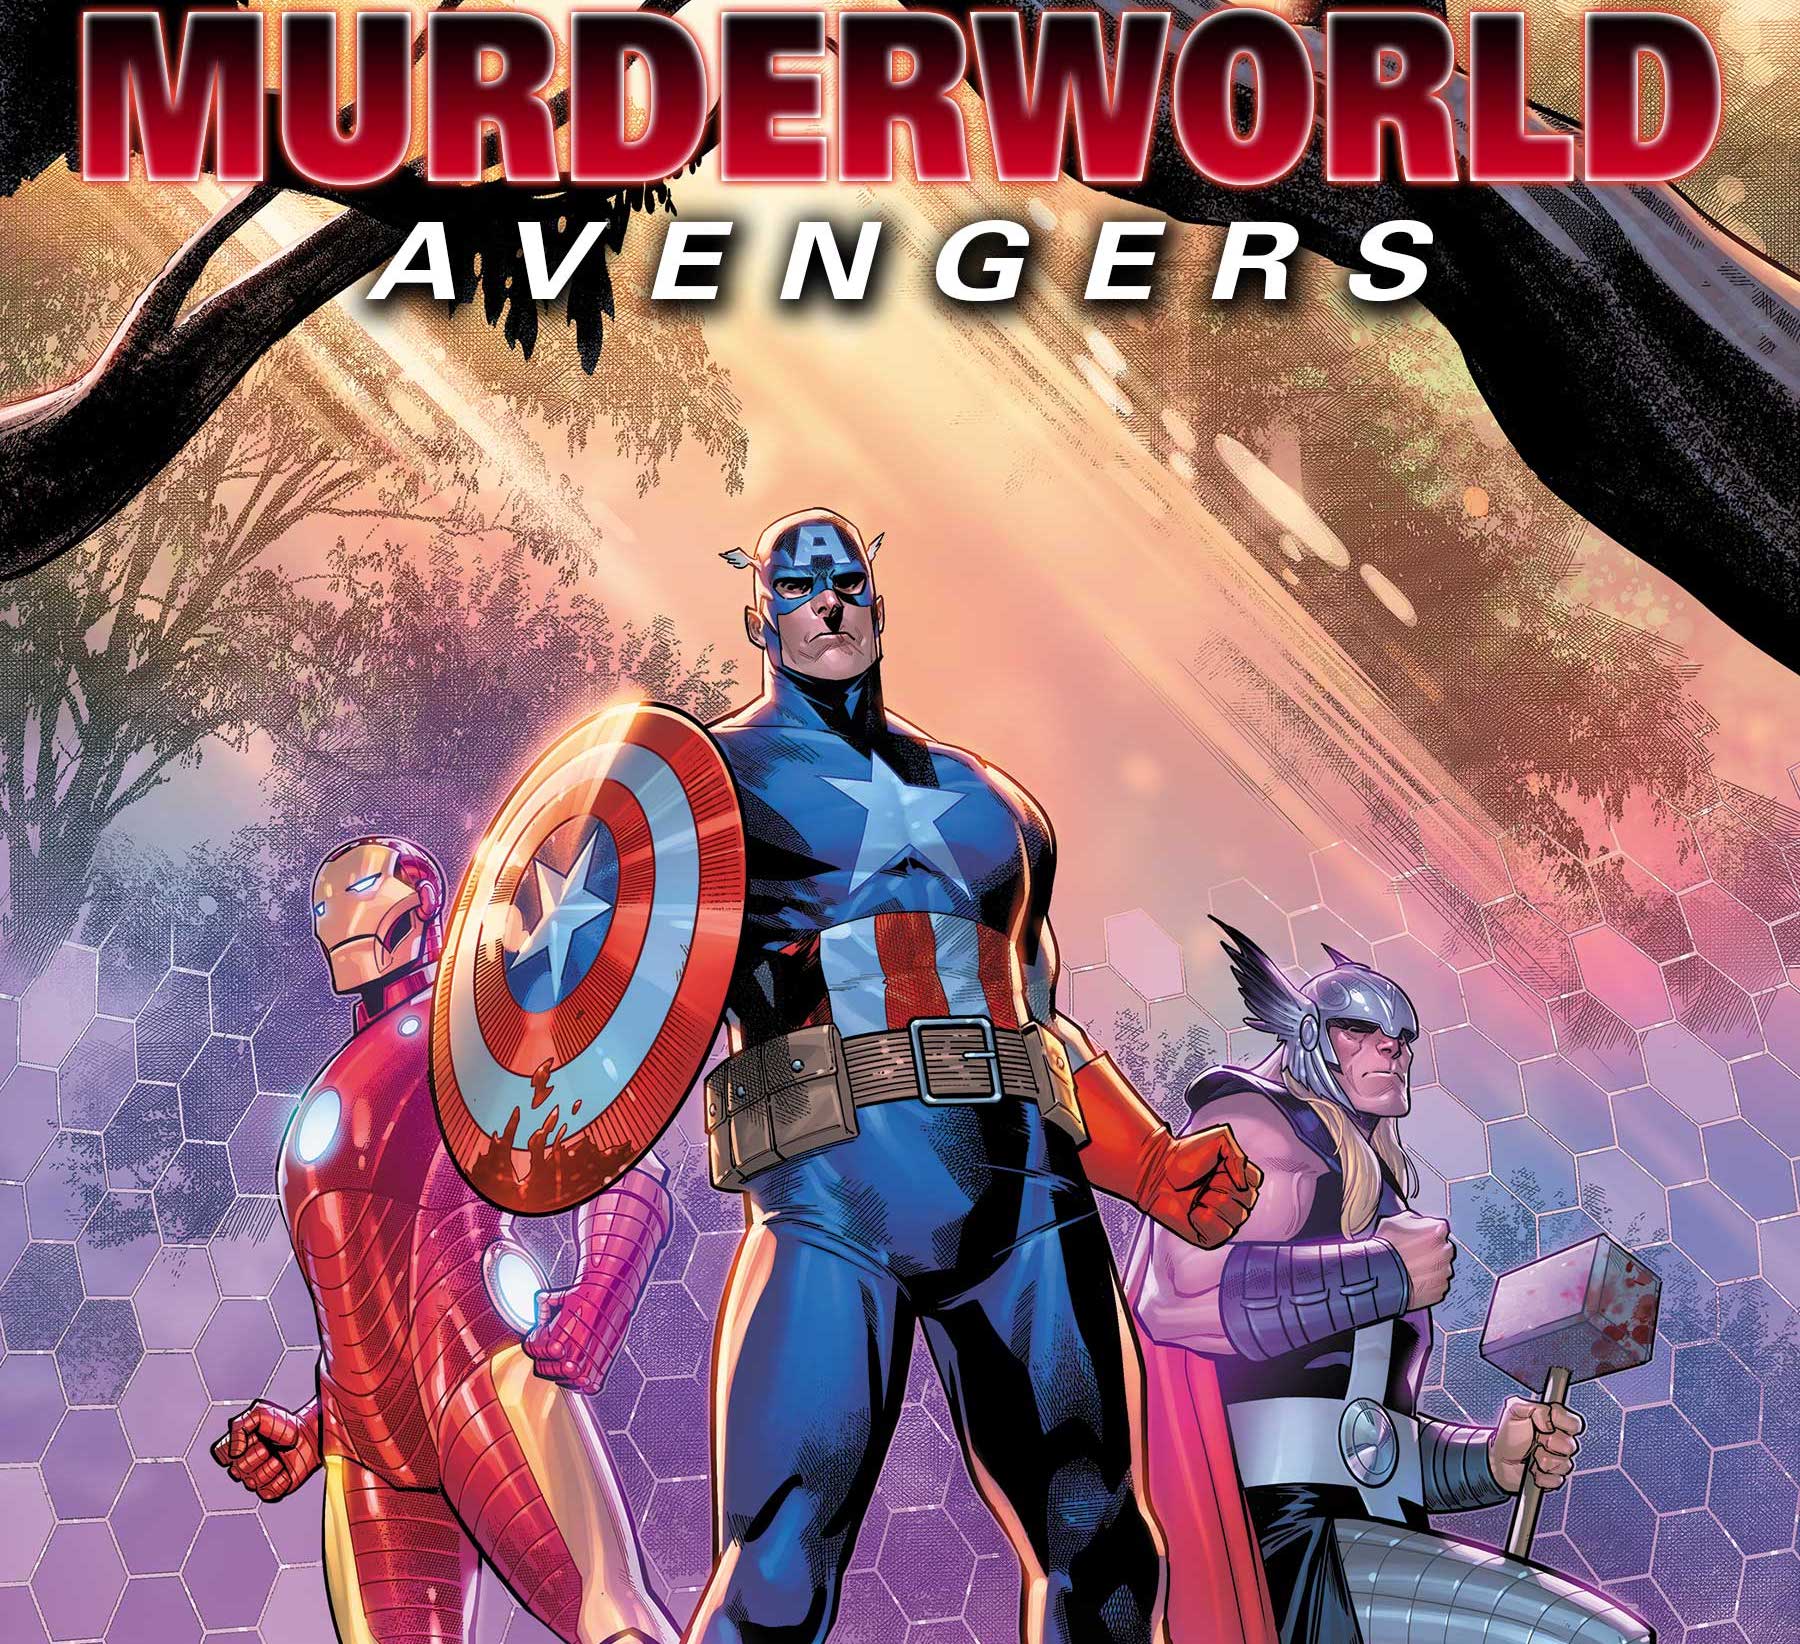 Murderworld: Avengers #1 review